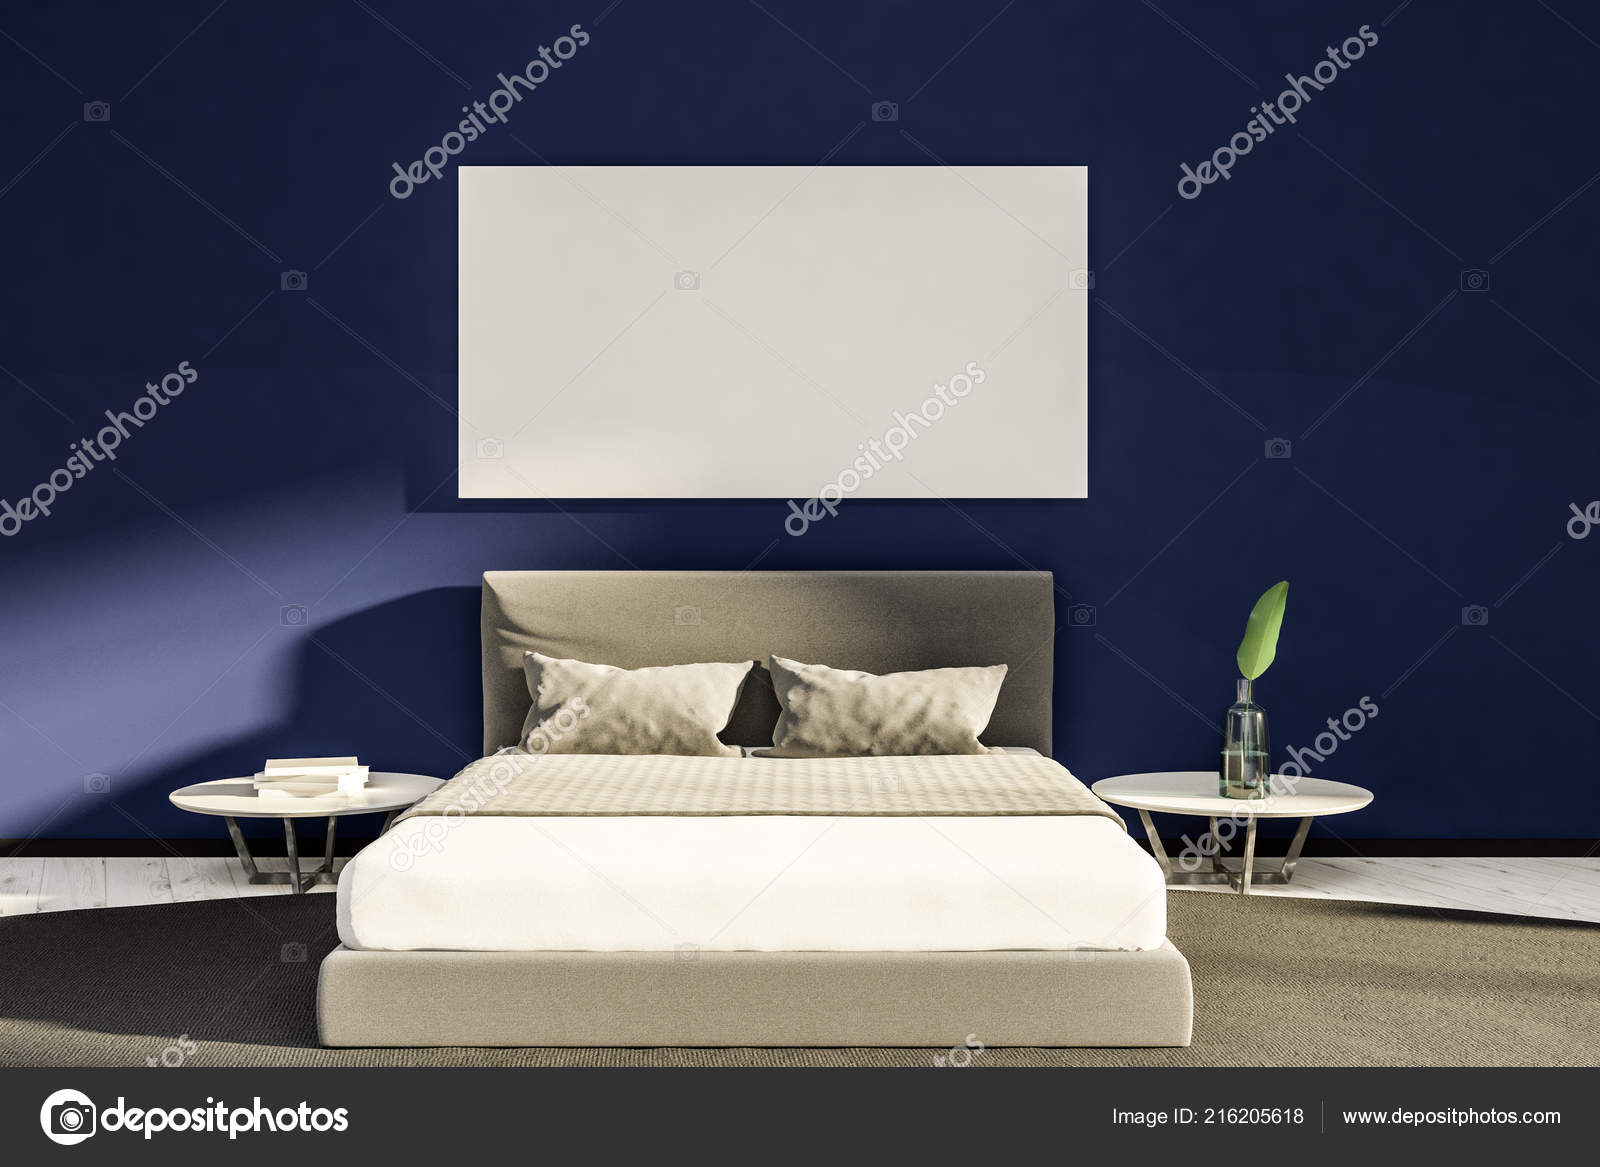 Minimalistic Bedroom Interior Dark Blue Walls White Wooden Floor